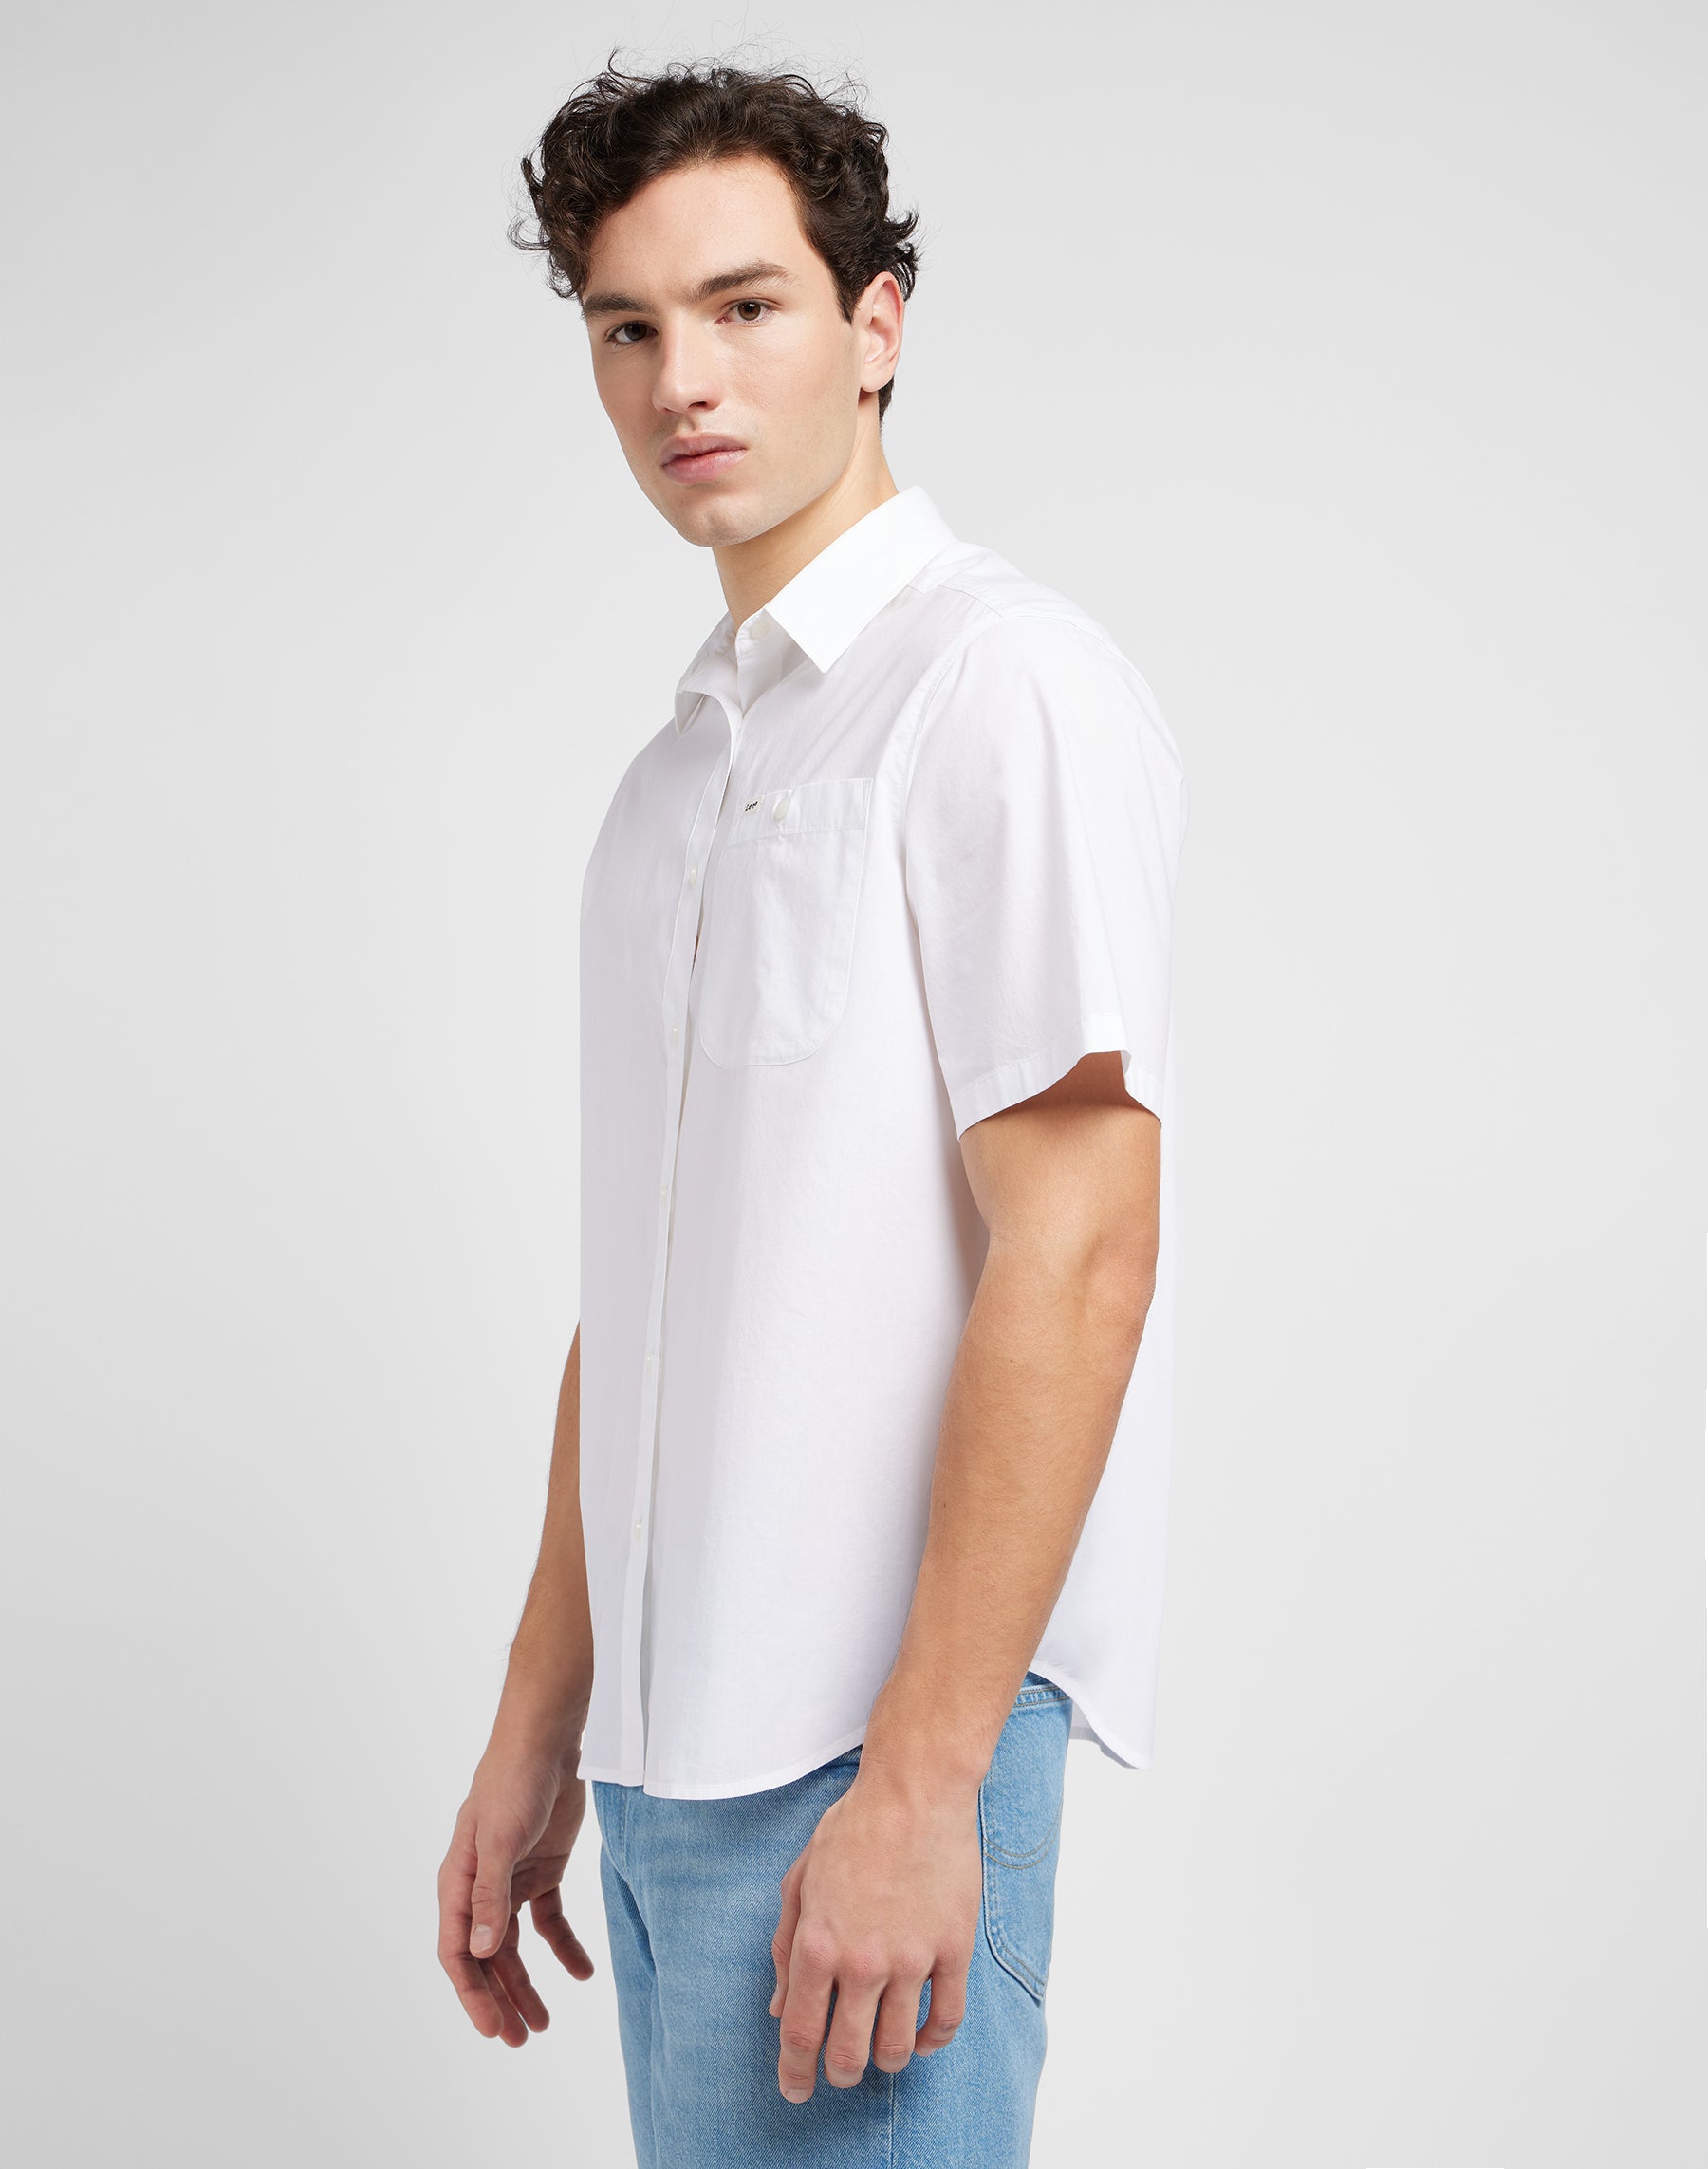 Patch Shirt in Bright White Hemden Lee   